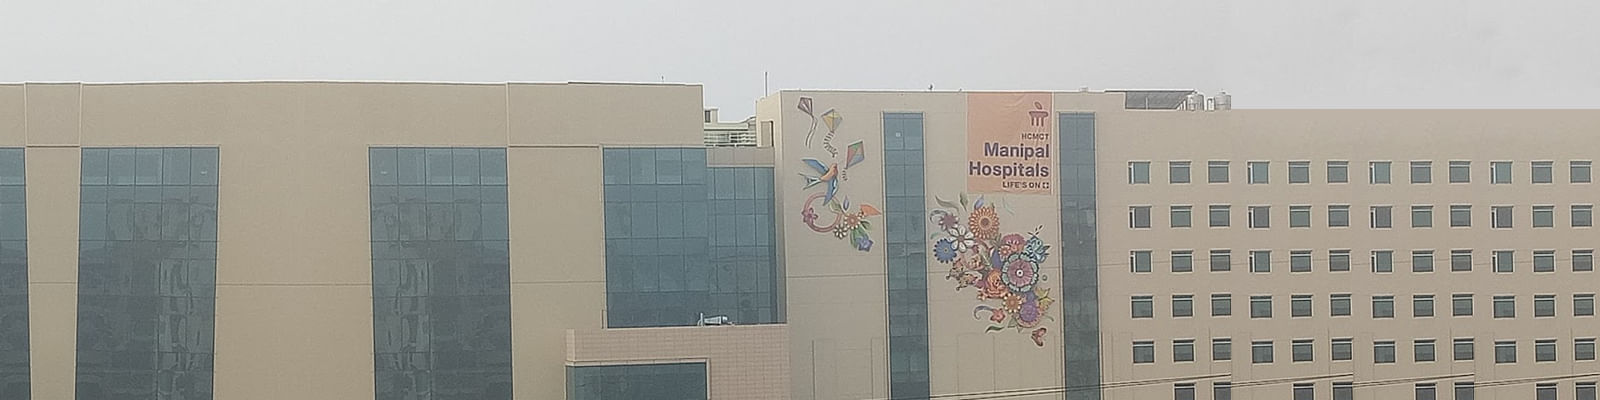 Manipal Hospital Dwarka - Delhi